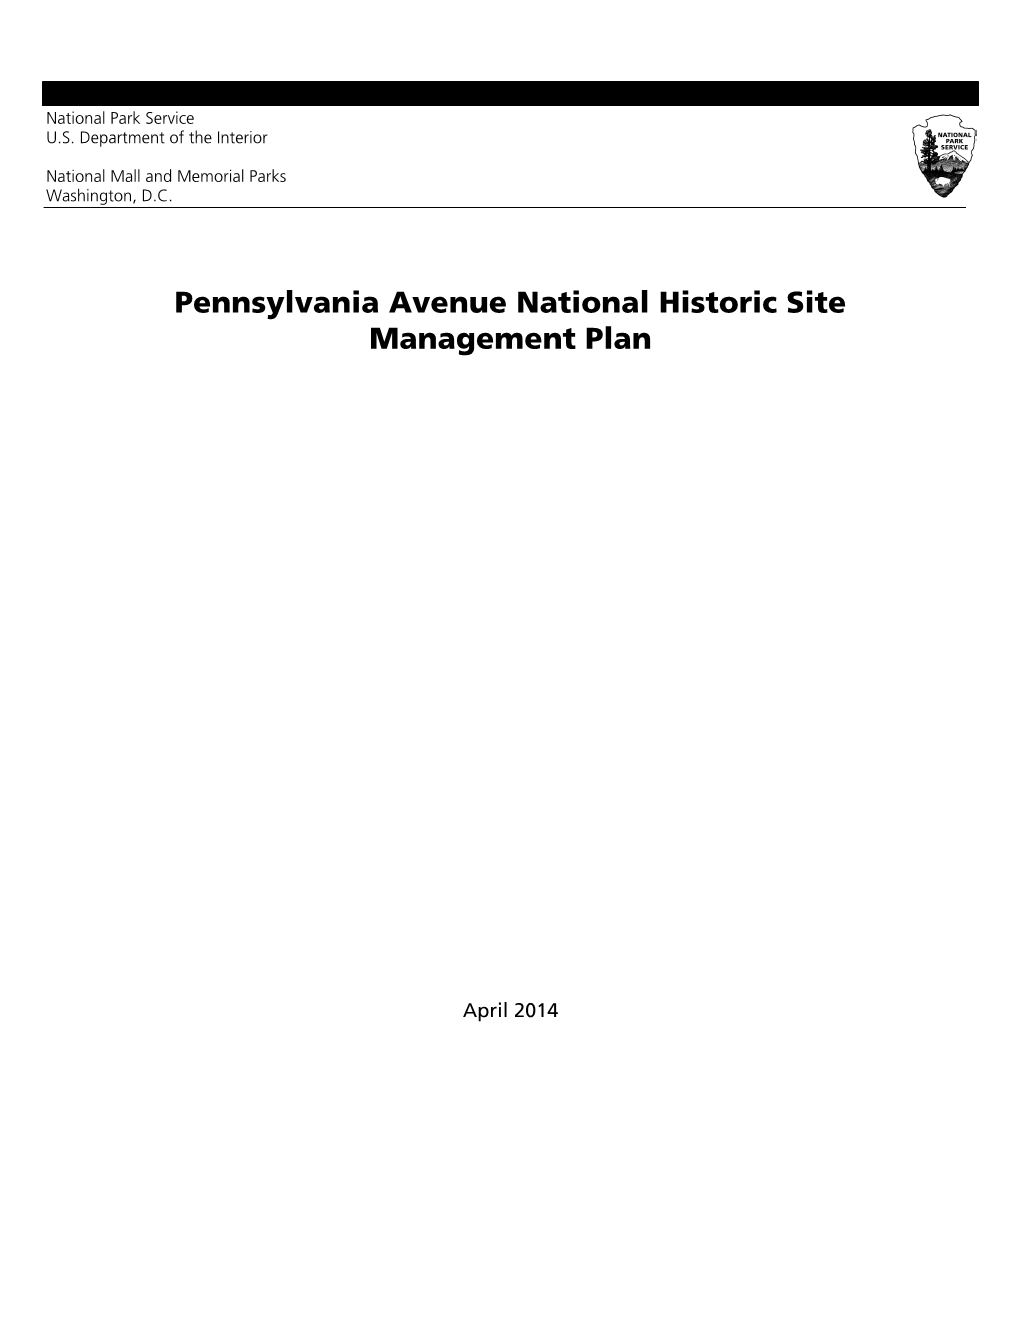 Pennsylvania Avenue National Historic Site Management Plan